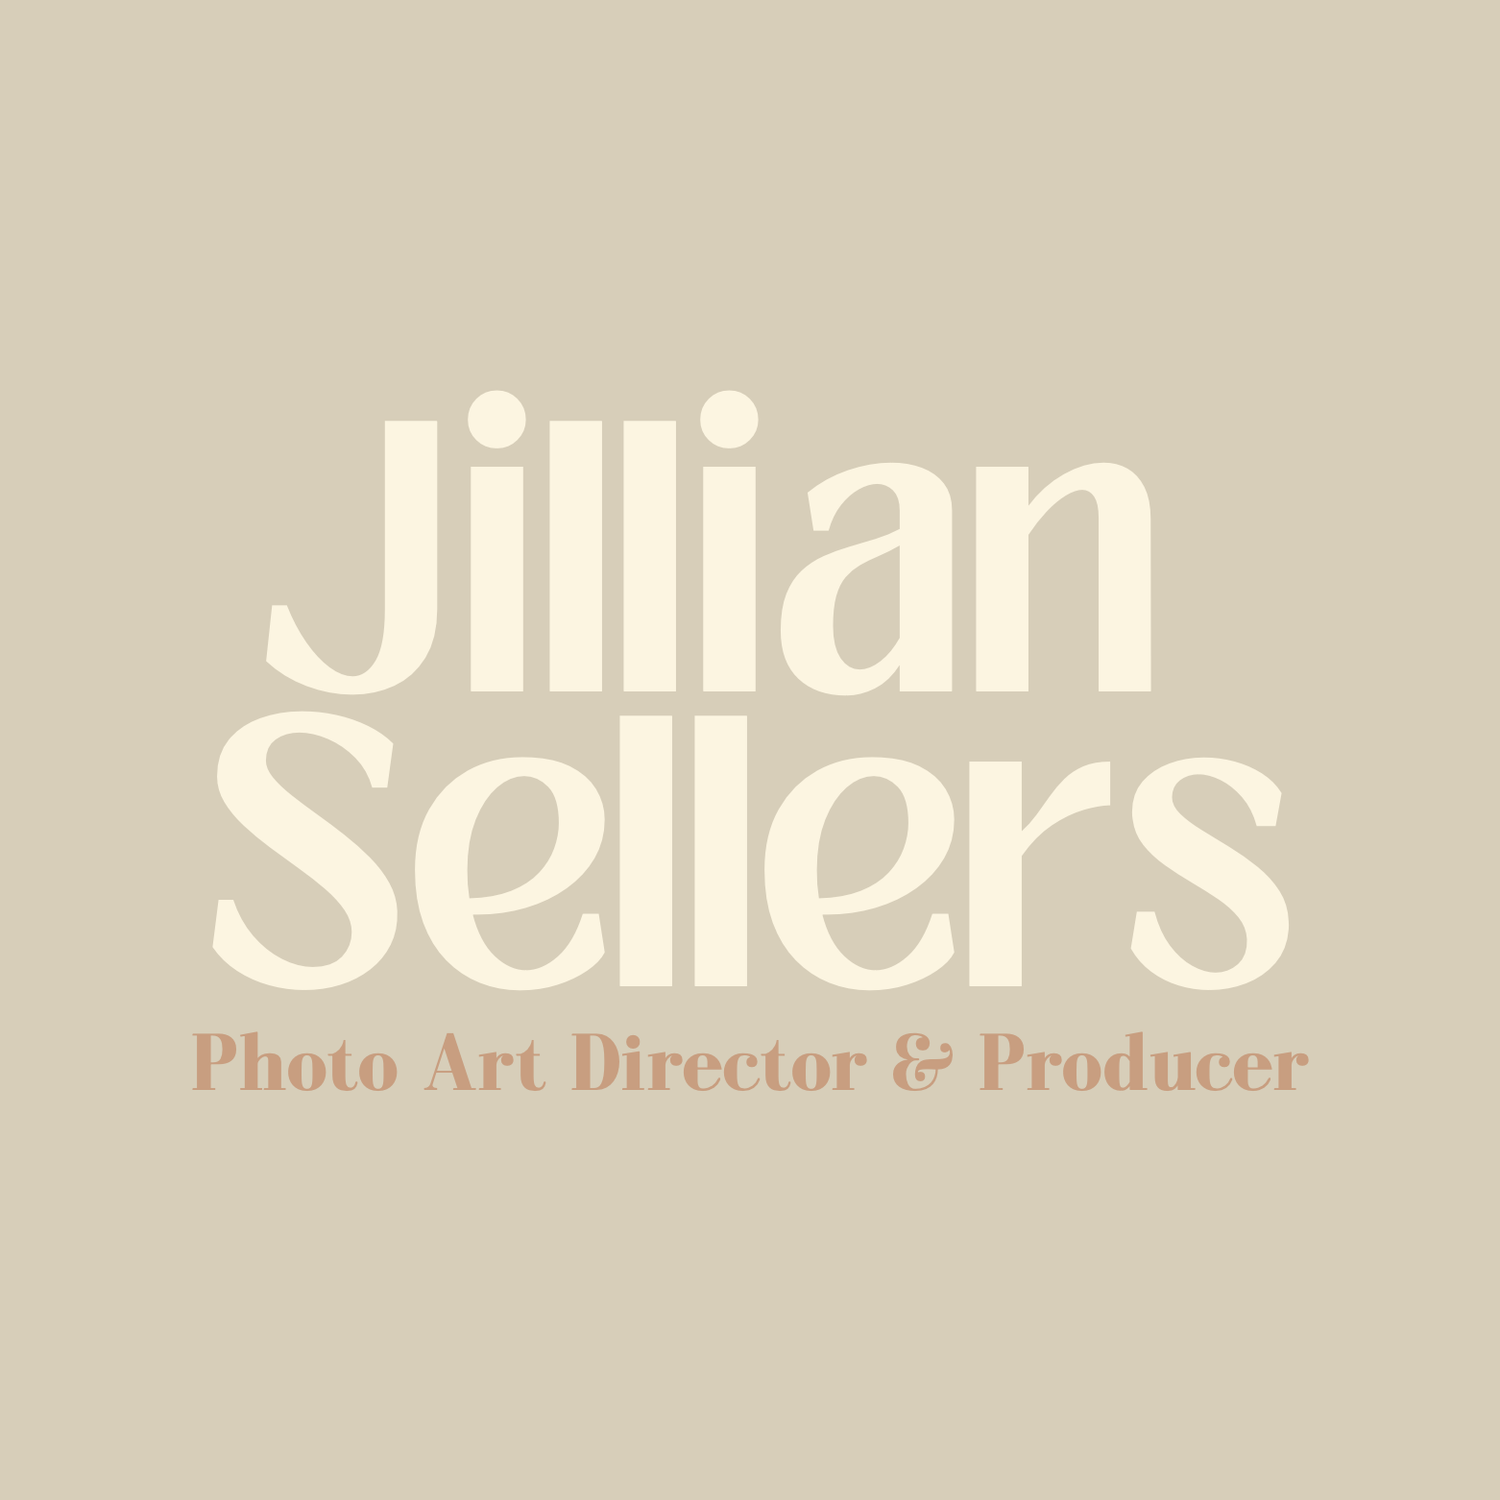 Jillian Sellers